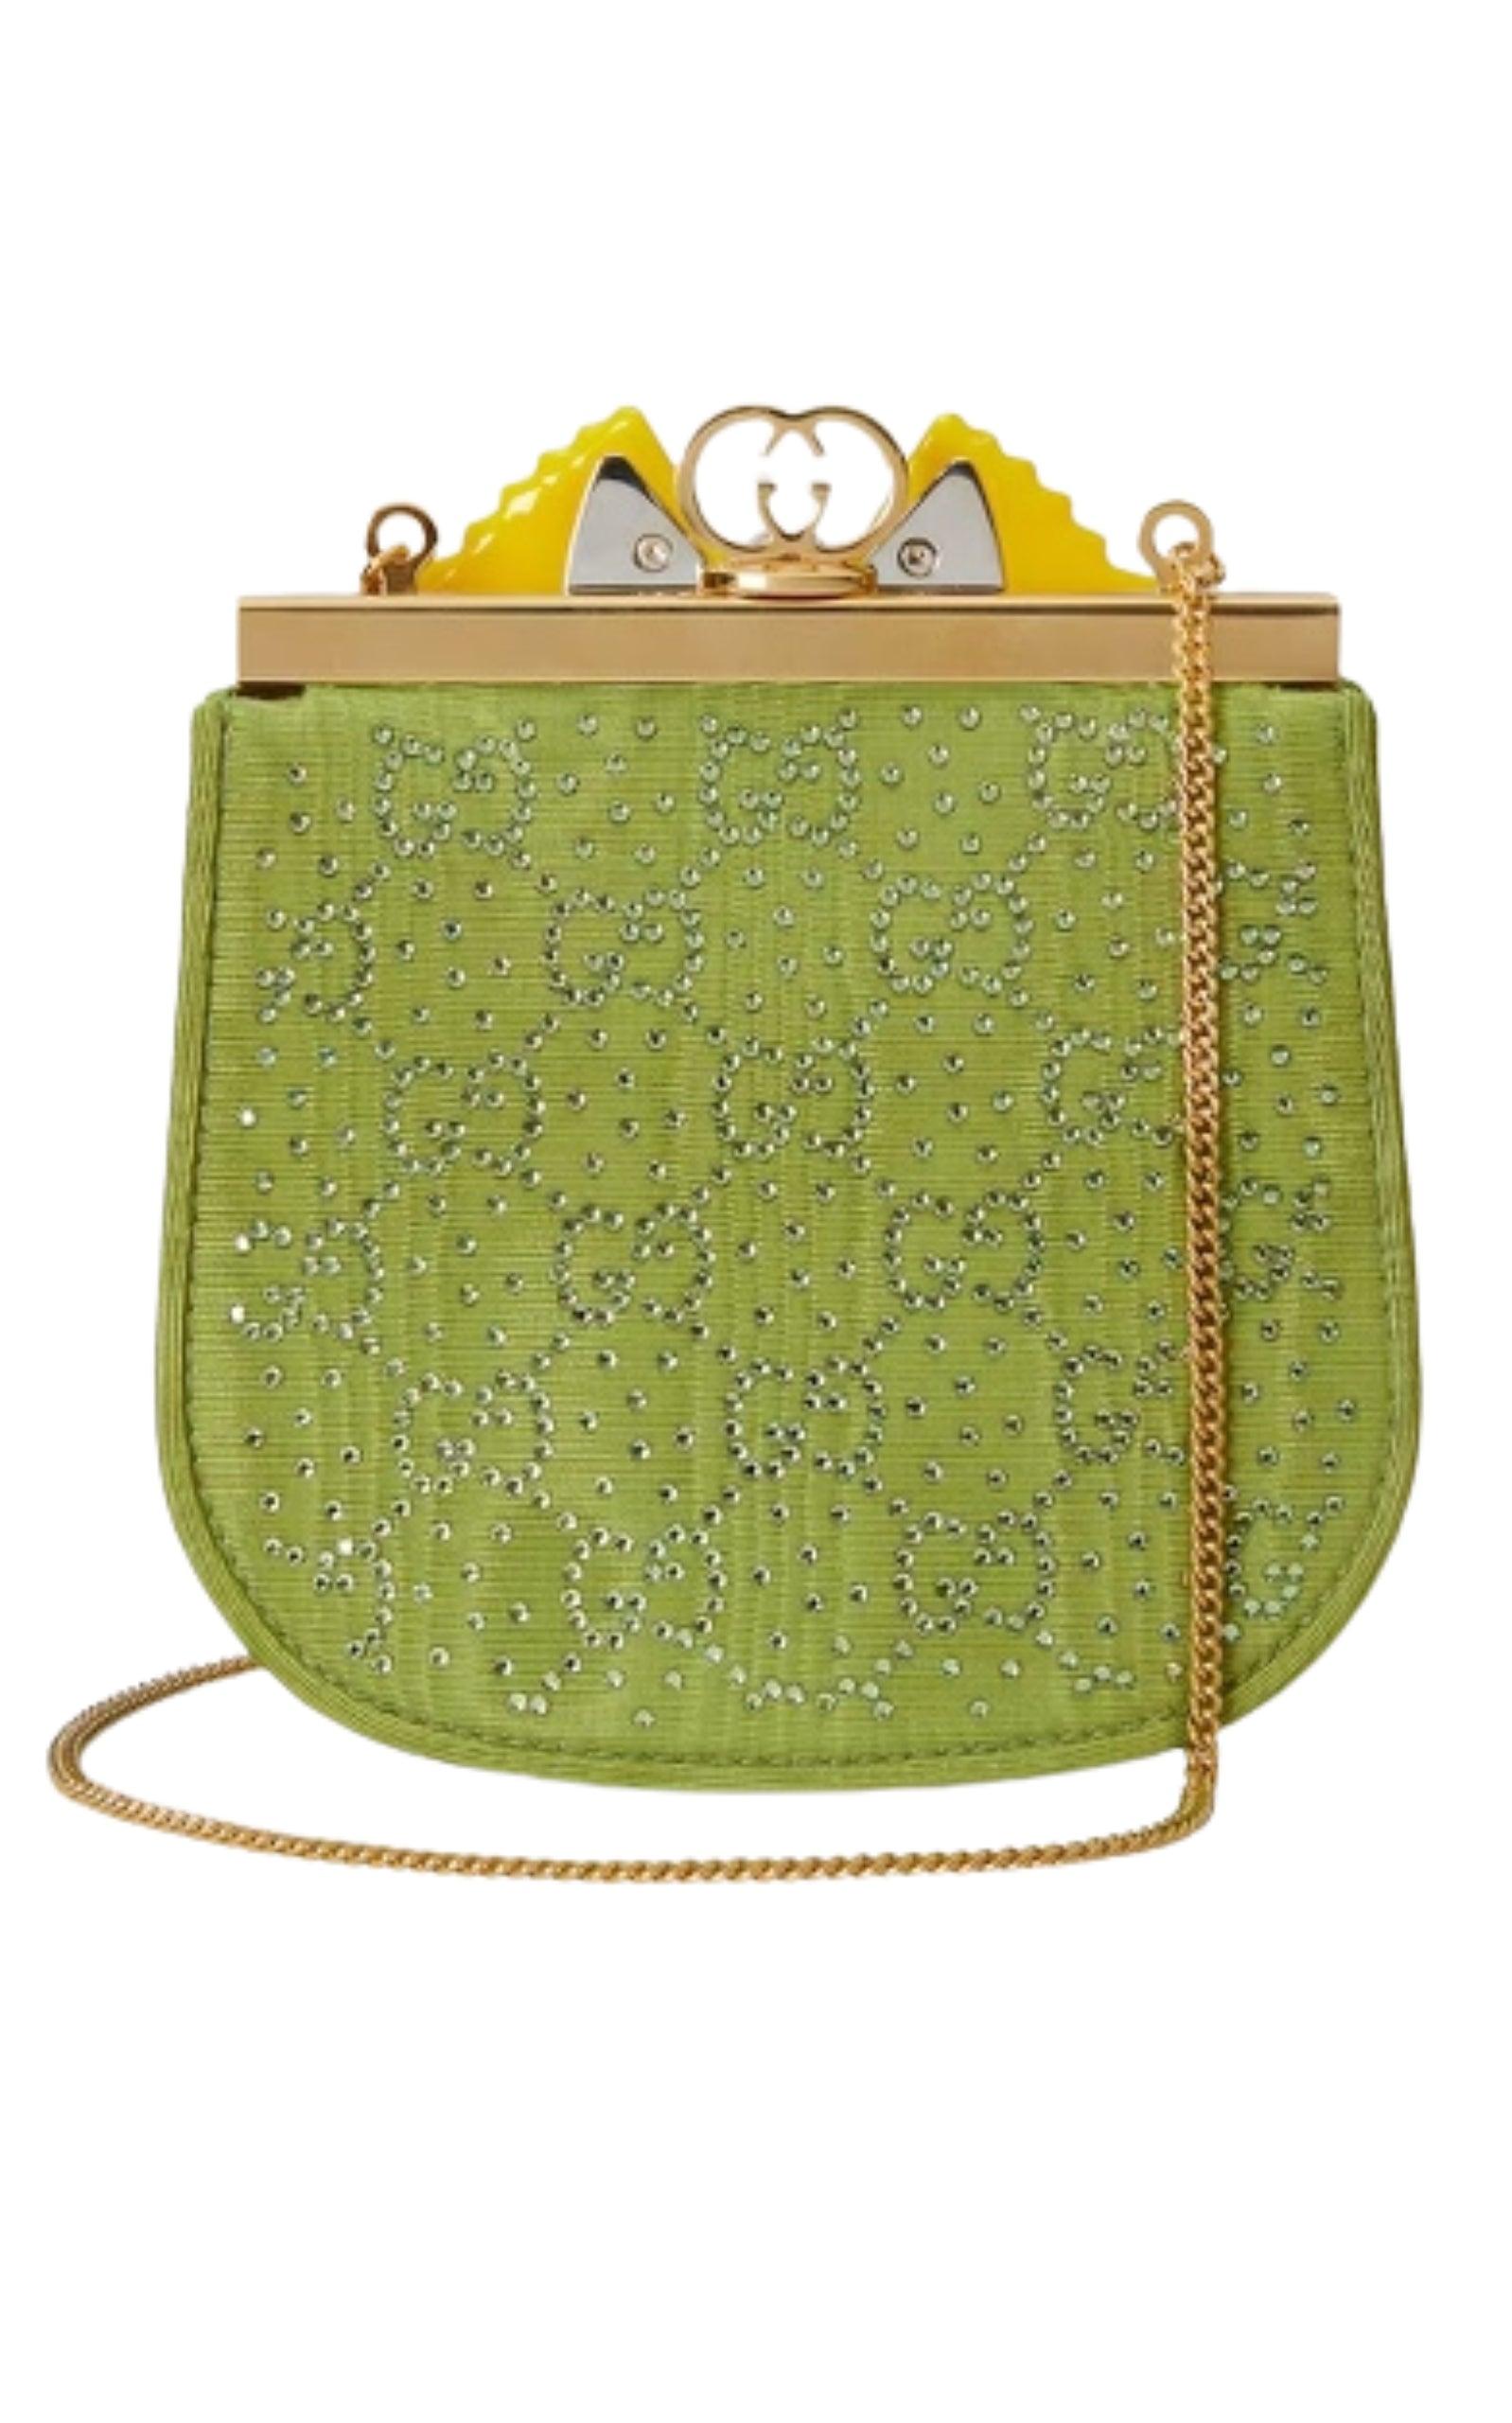 Gucci GG Moire Fabric Handbag with Bow and Crystals - Runway Catalog